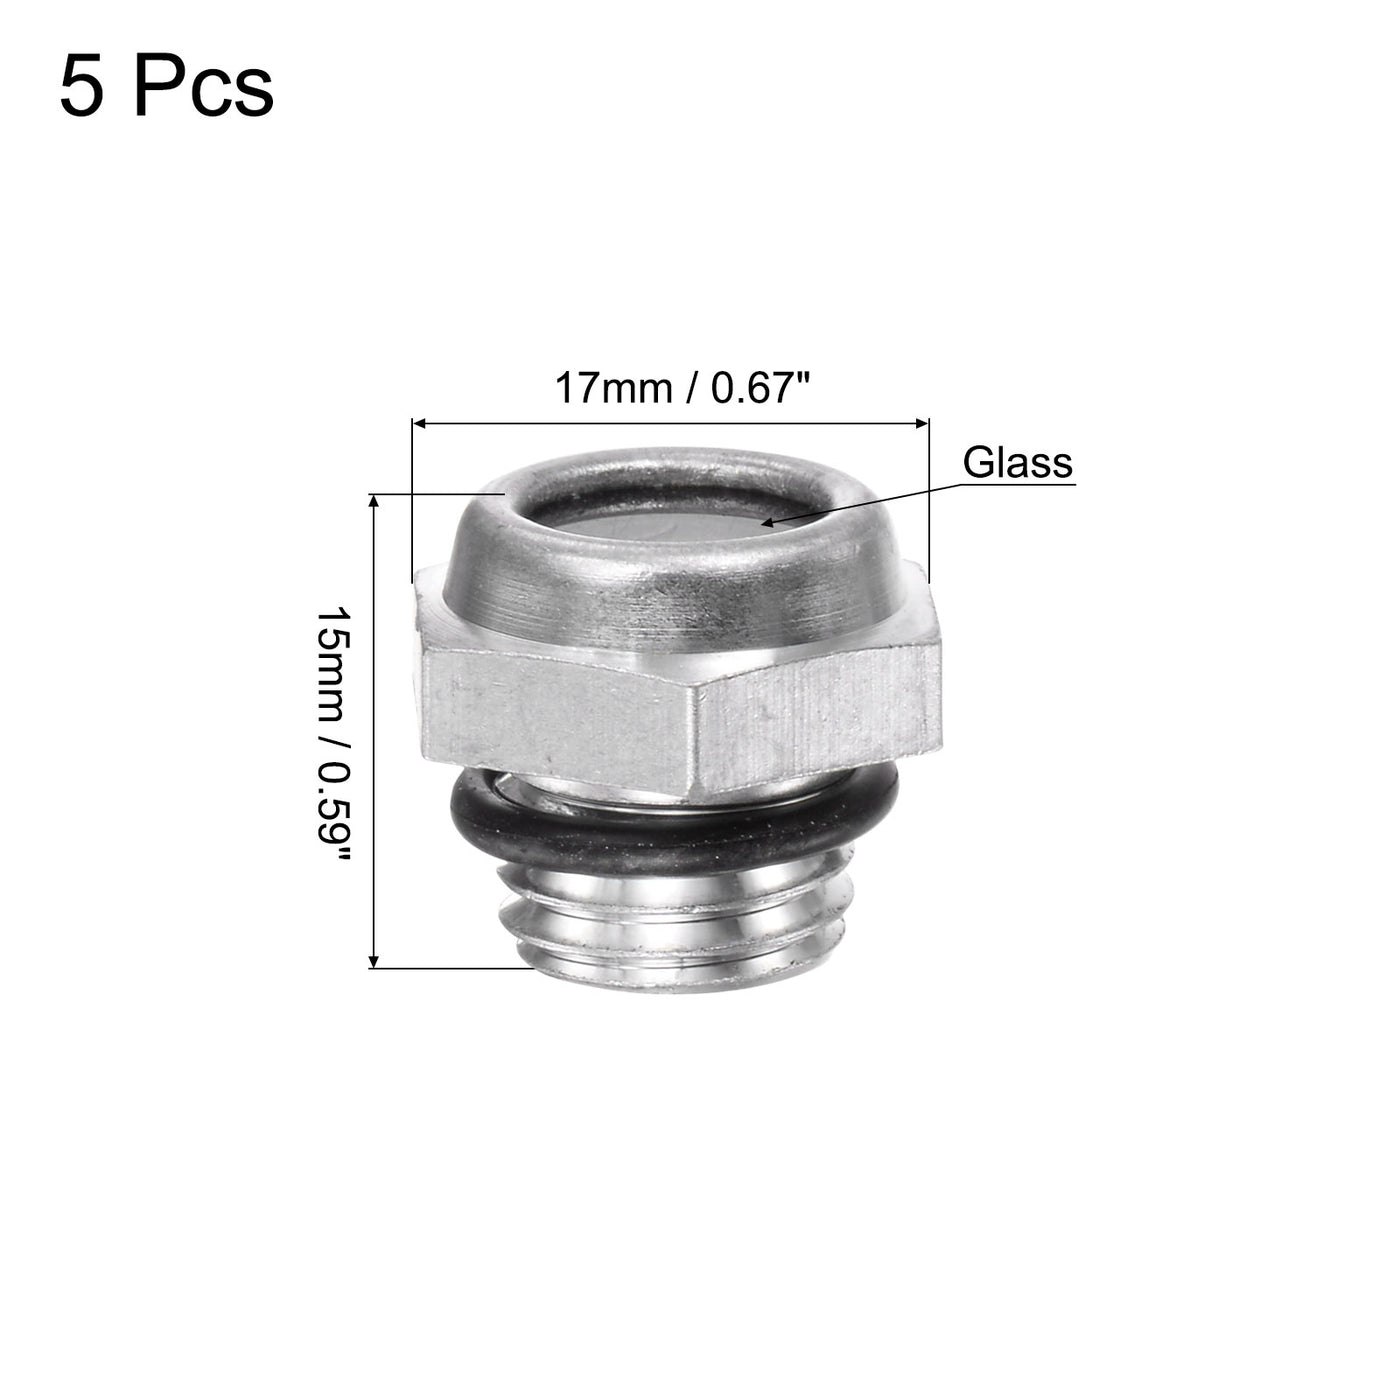 Uxcell Uxcell Air Compressor Oil Level Gauge Sight Glass M10x1mm Male Thread Aluminum 5Pcs